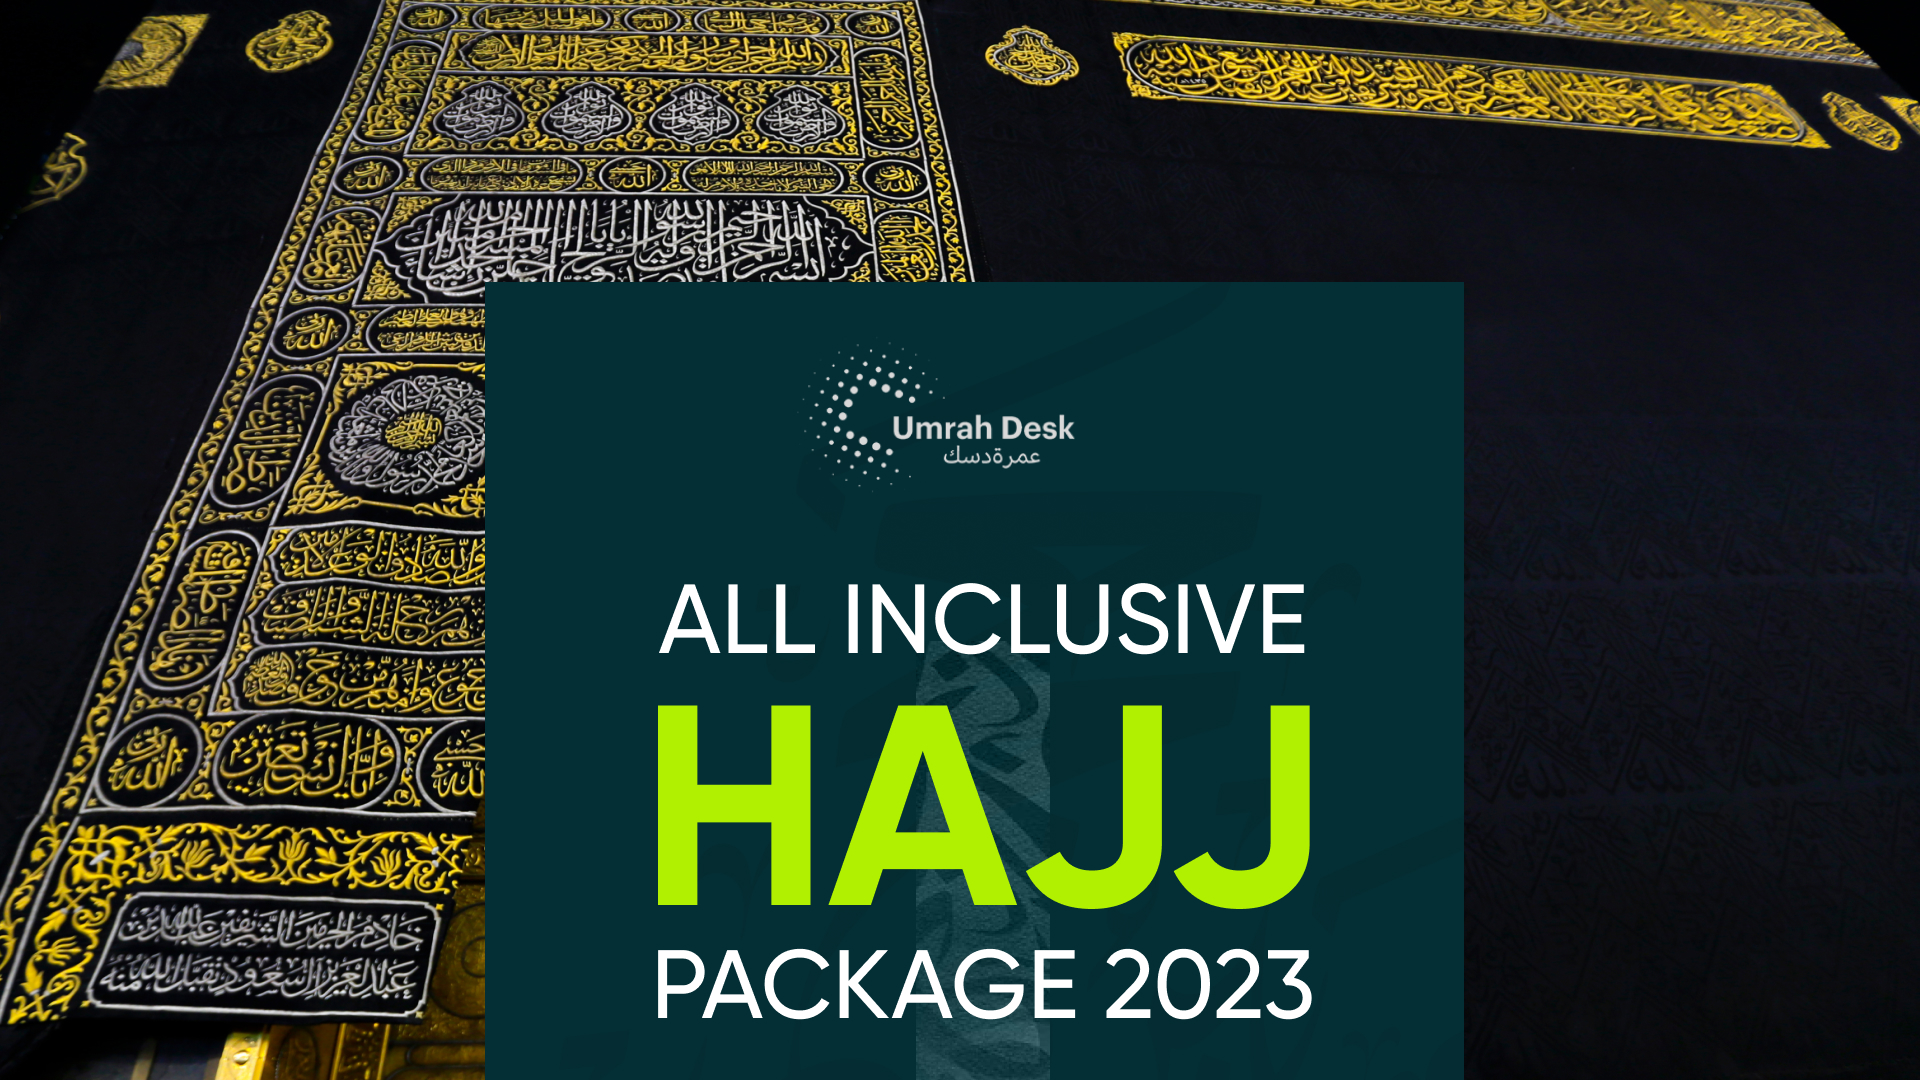 All inclusive hajj package 2023